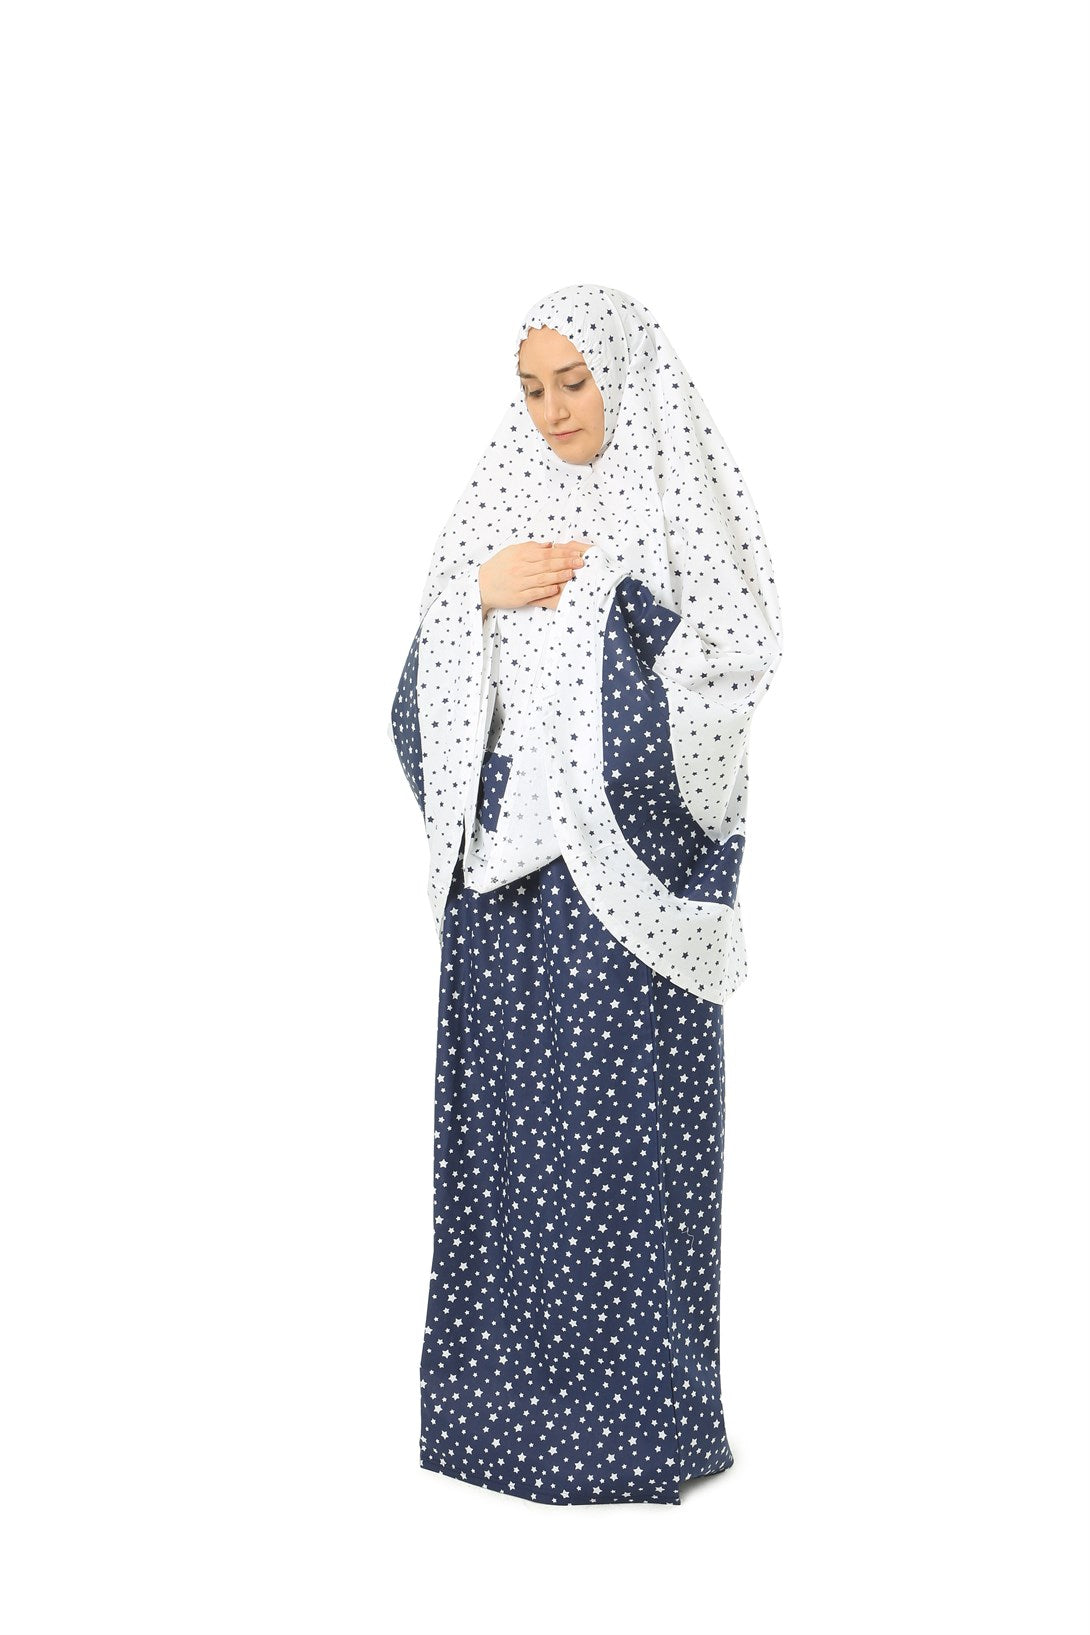 Women's Prayer Dress Mint Color Star Printed Belt Pattern